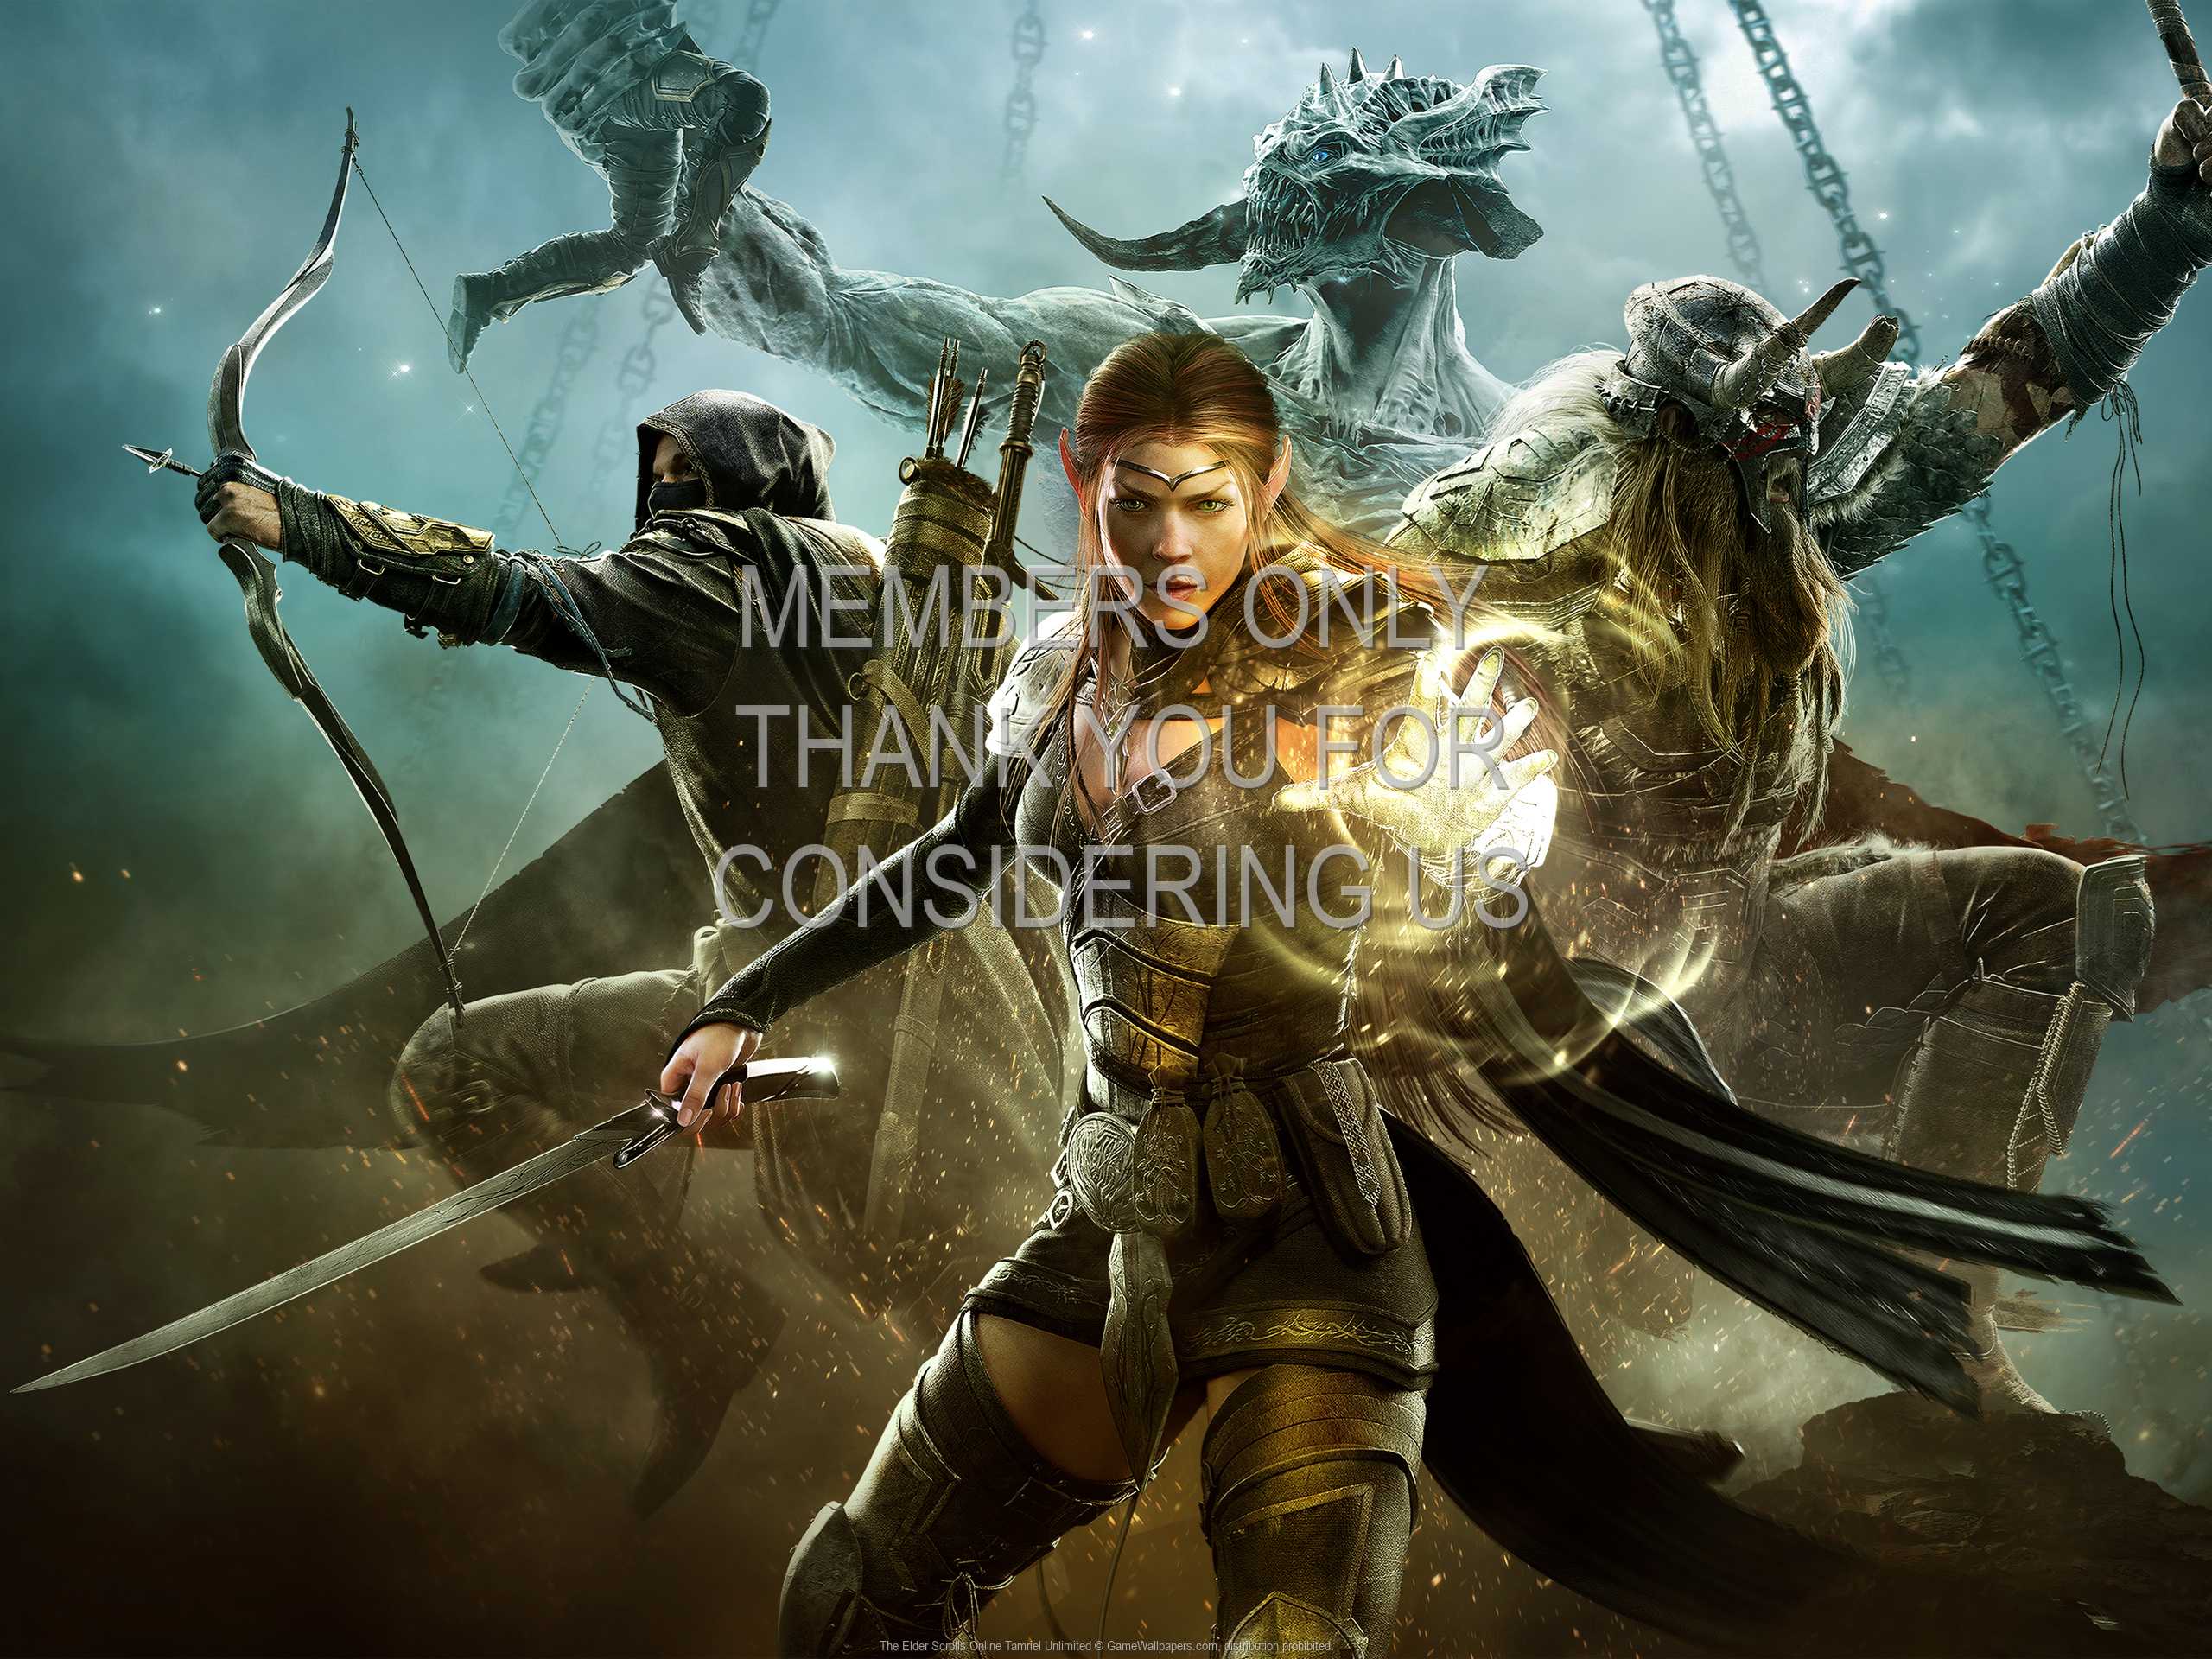 The Elder Scrolls Online: Tamriel Unlimited 1080p Horizontal Mobile wallpaper or background 01